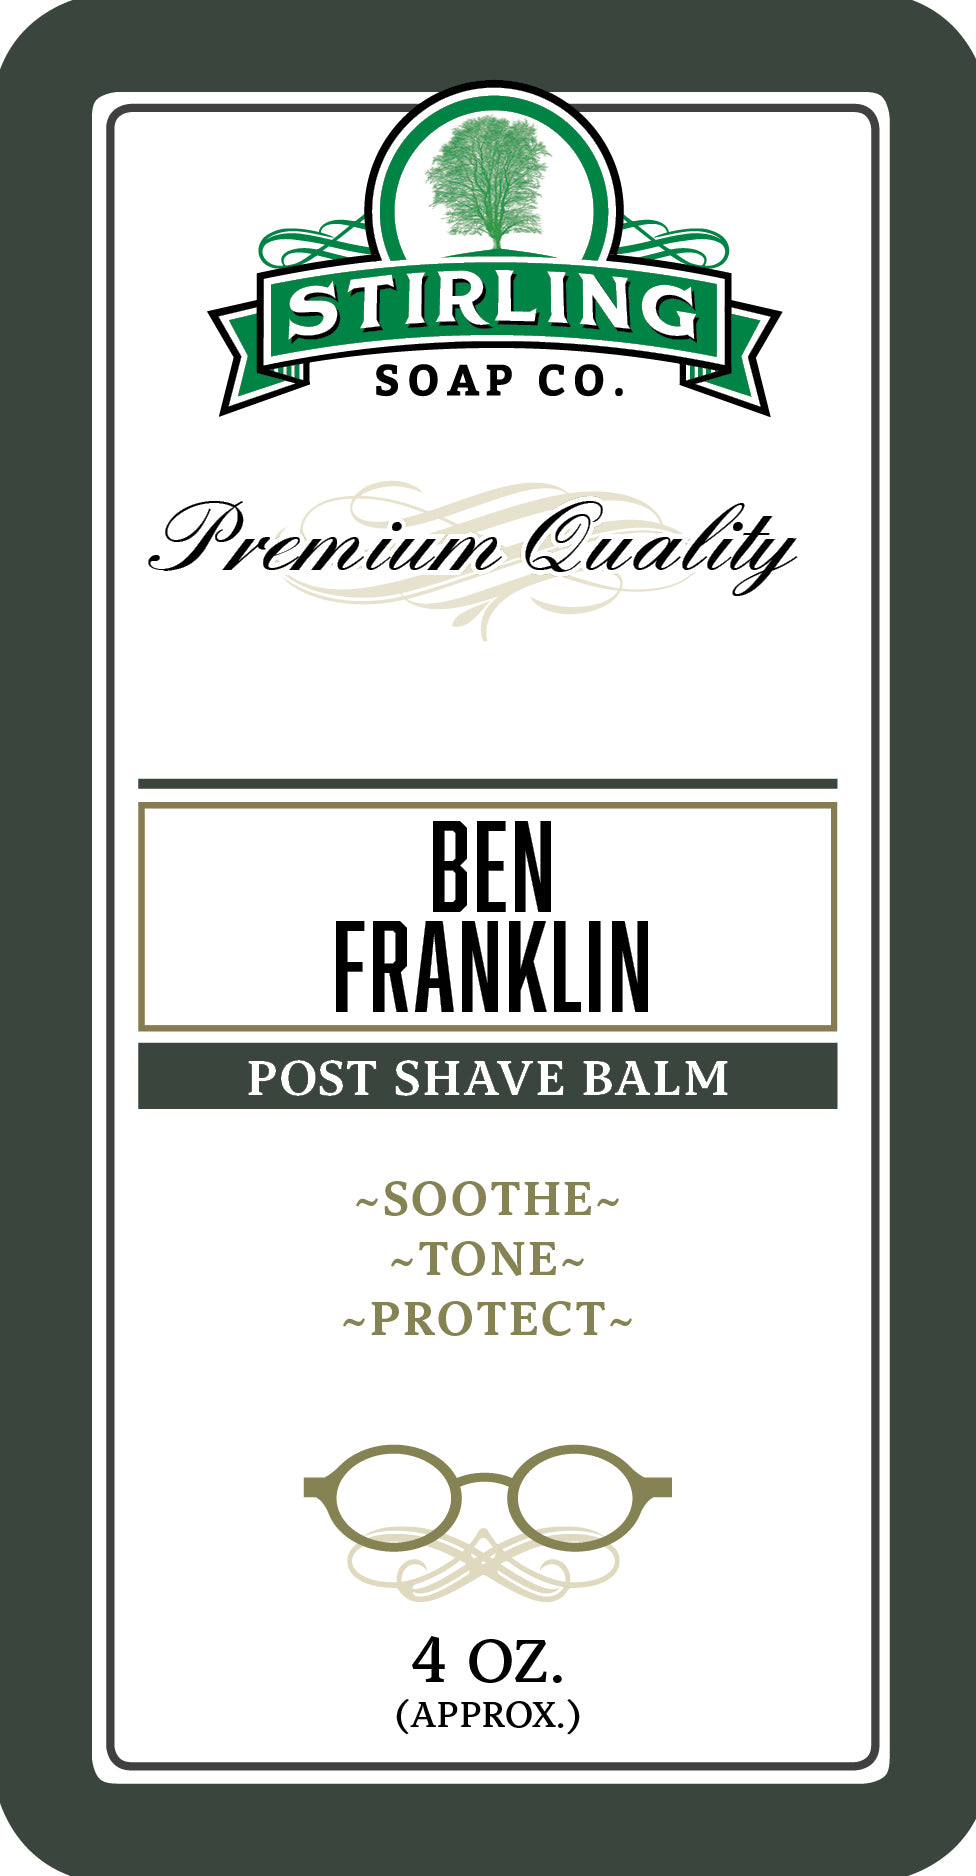 Ben Franklin - Post-Shave Balm